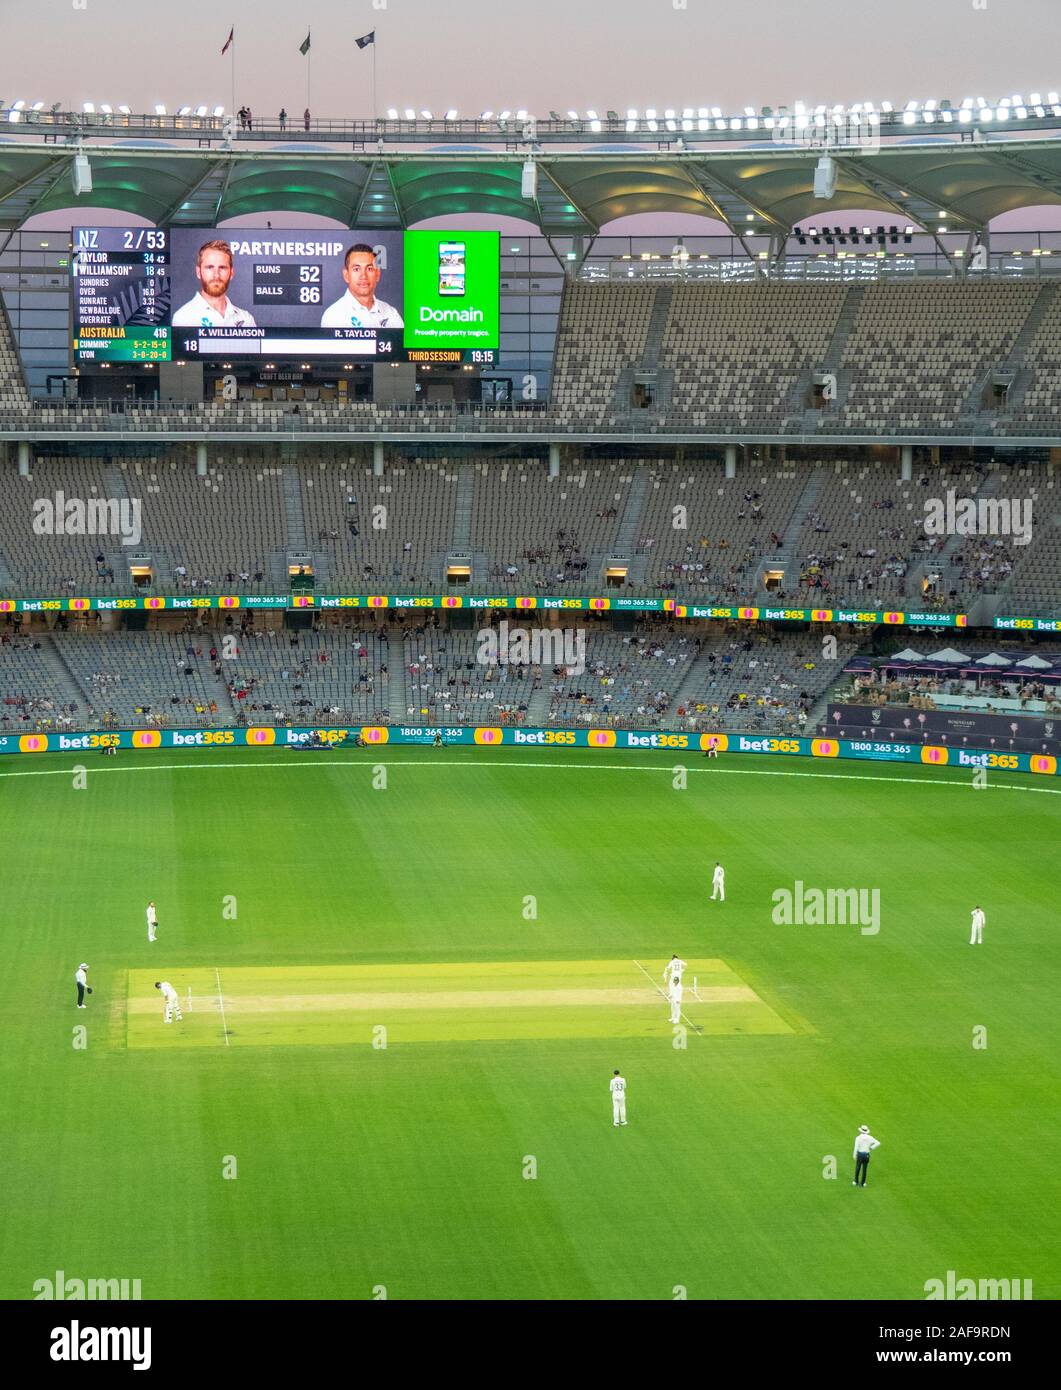 Test cricket match Australia versus New Zealand at Optus Stadium Perth Western Australia. Stock Photo